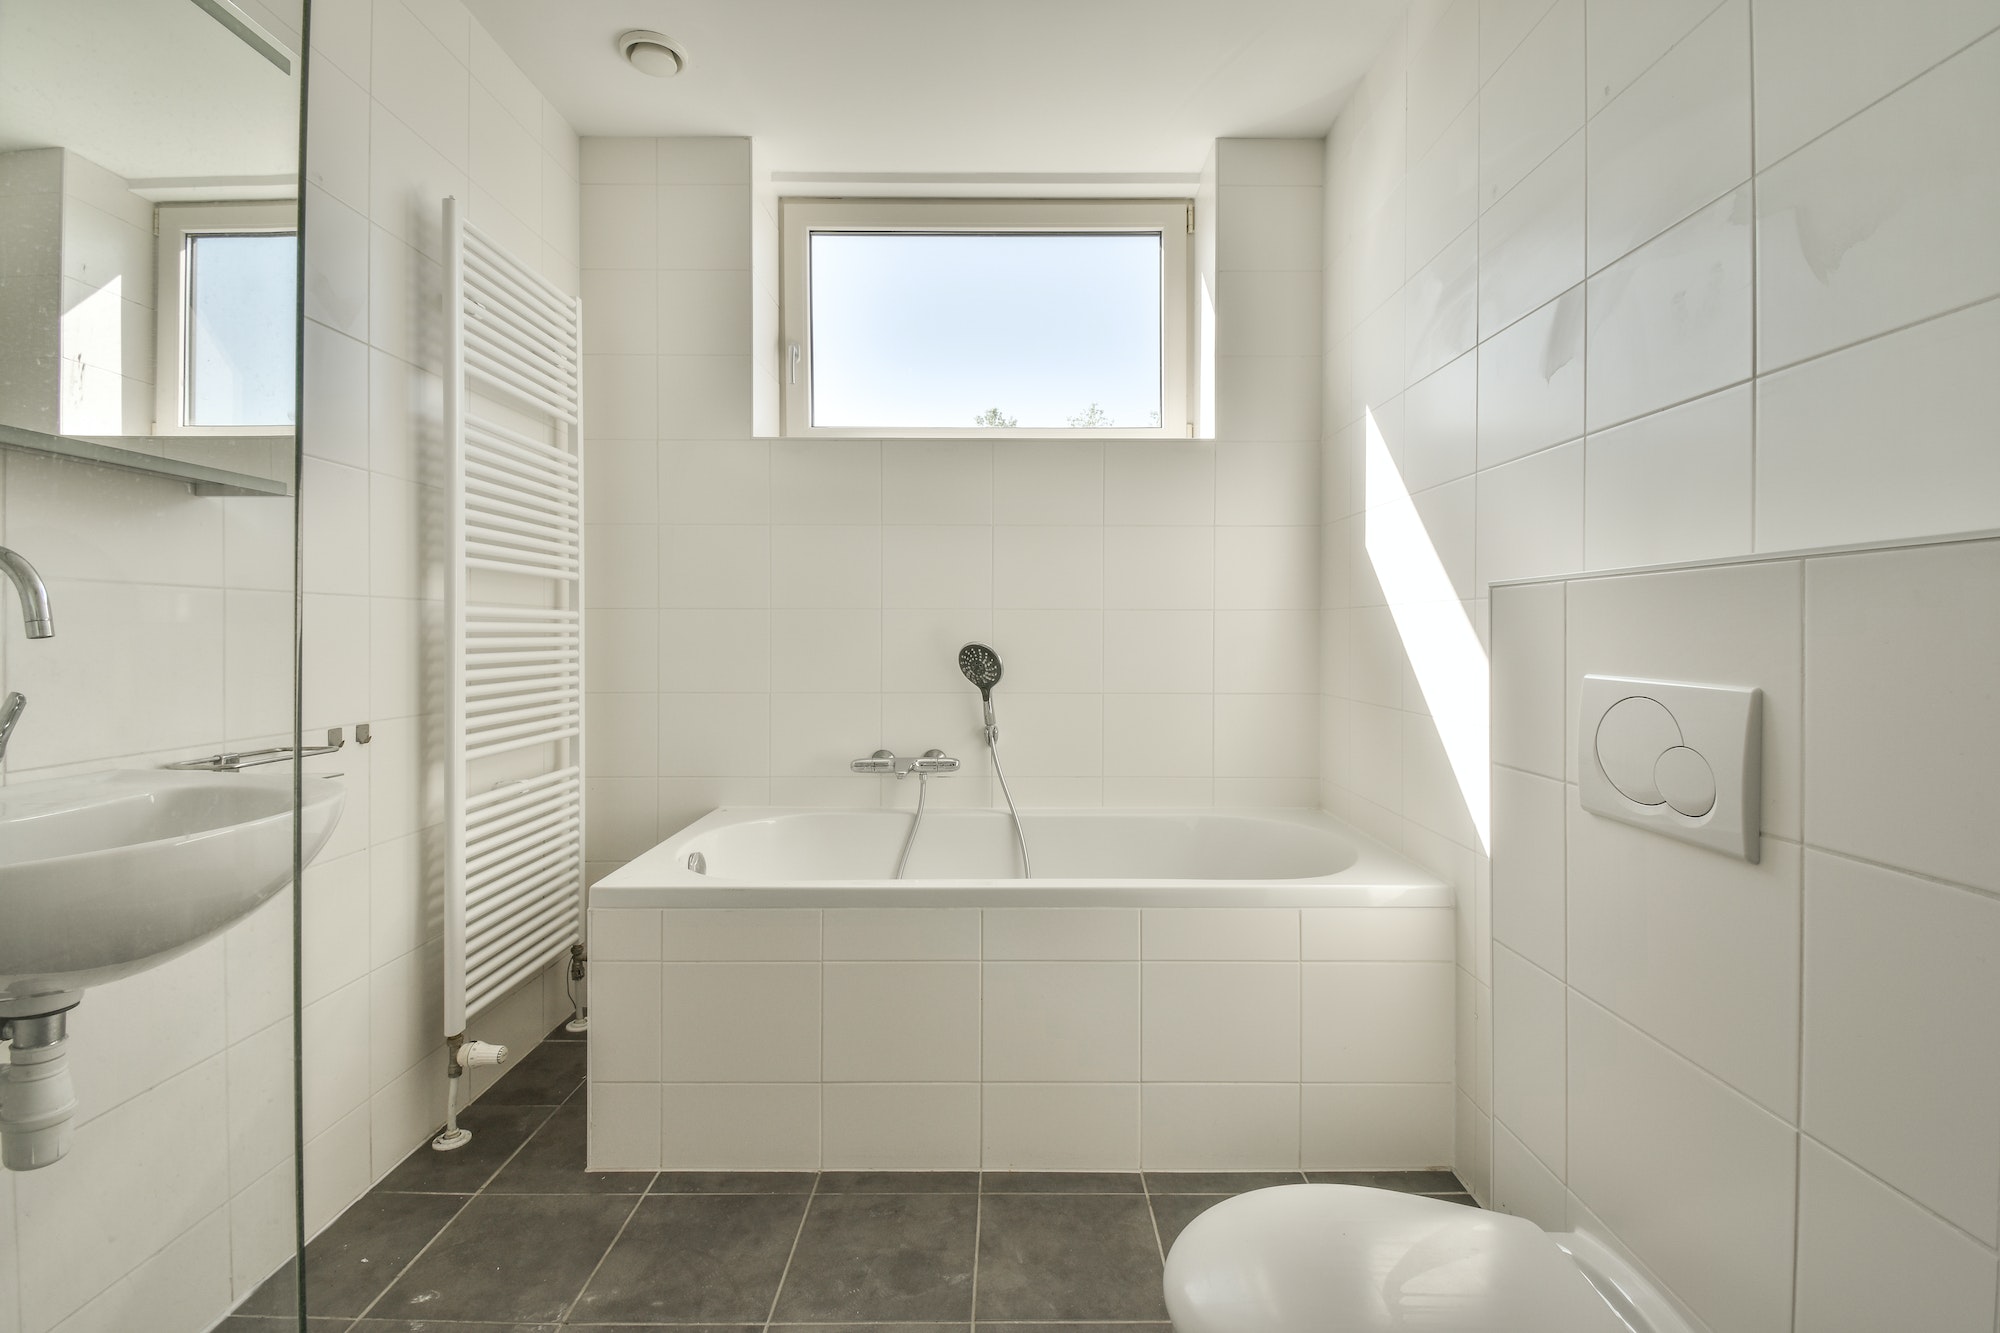 Interior of modern restroom with bathtub